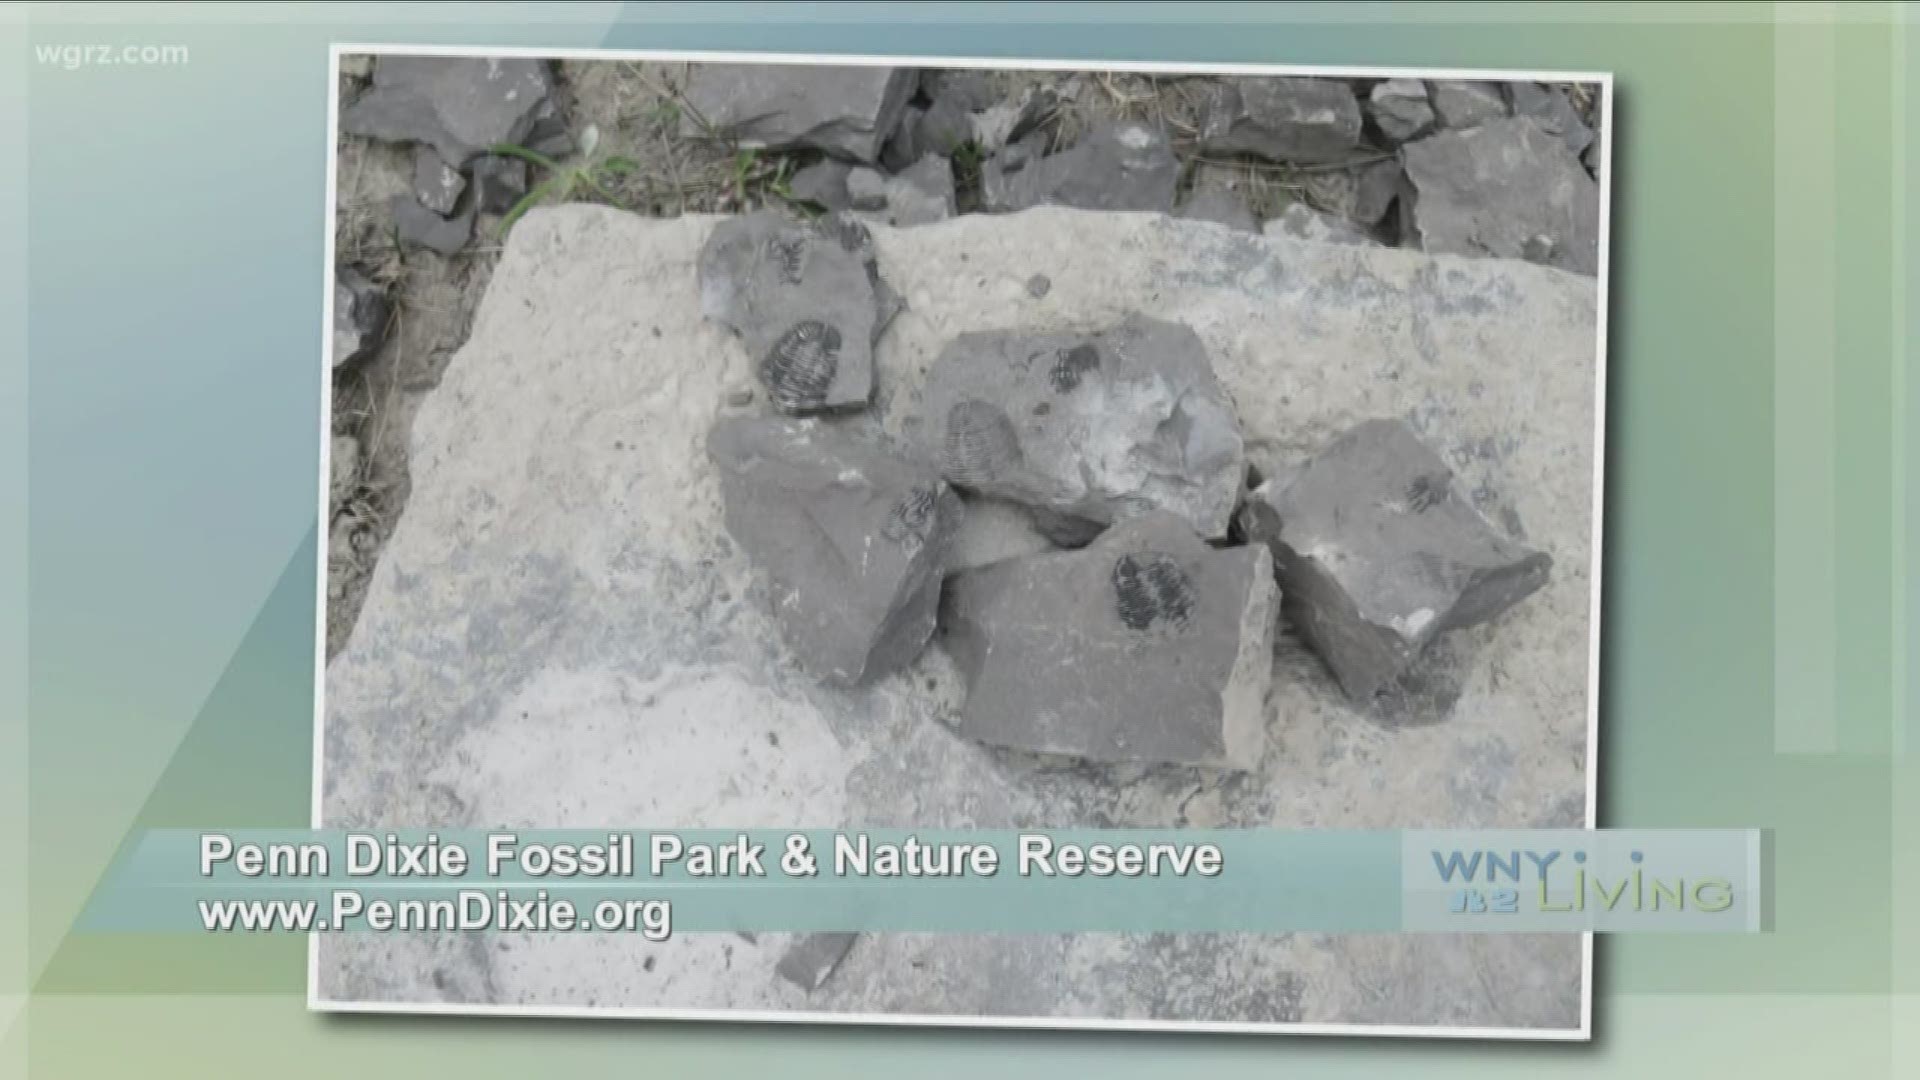 August 10 - Penn Dixie Fossil Park & Nature Reserve